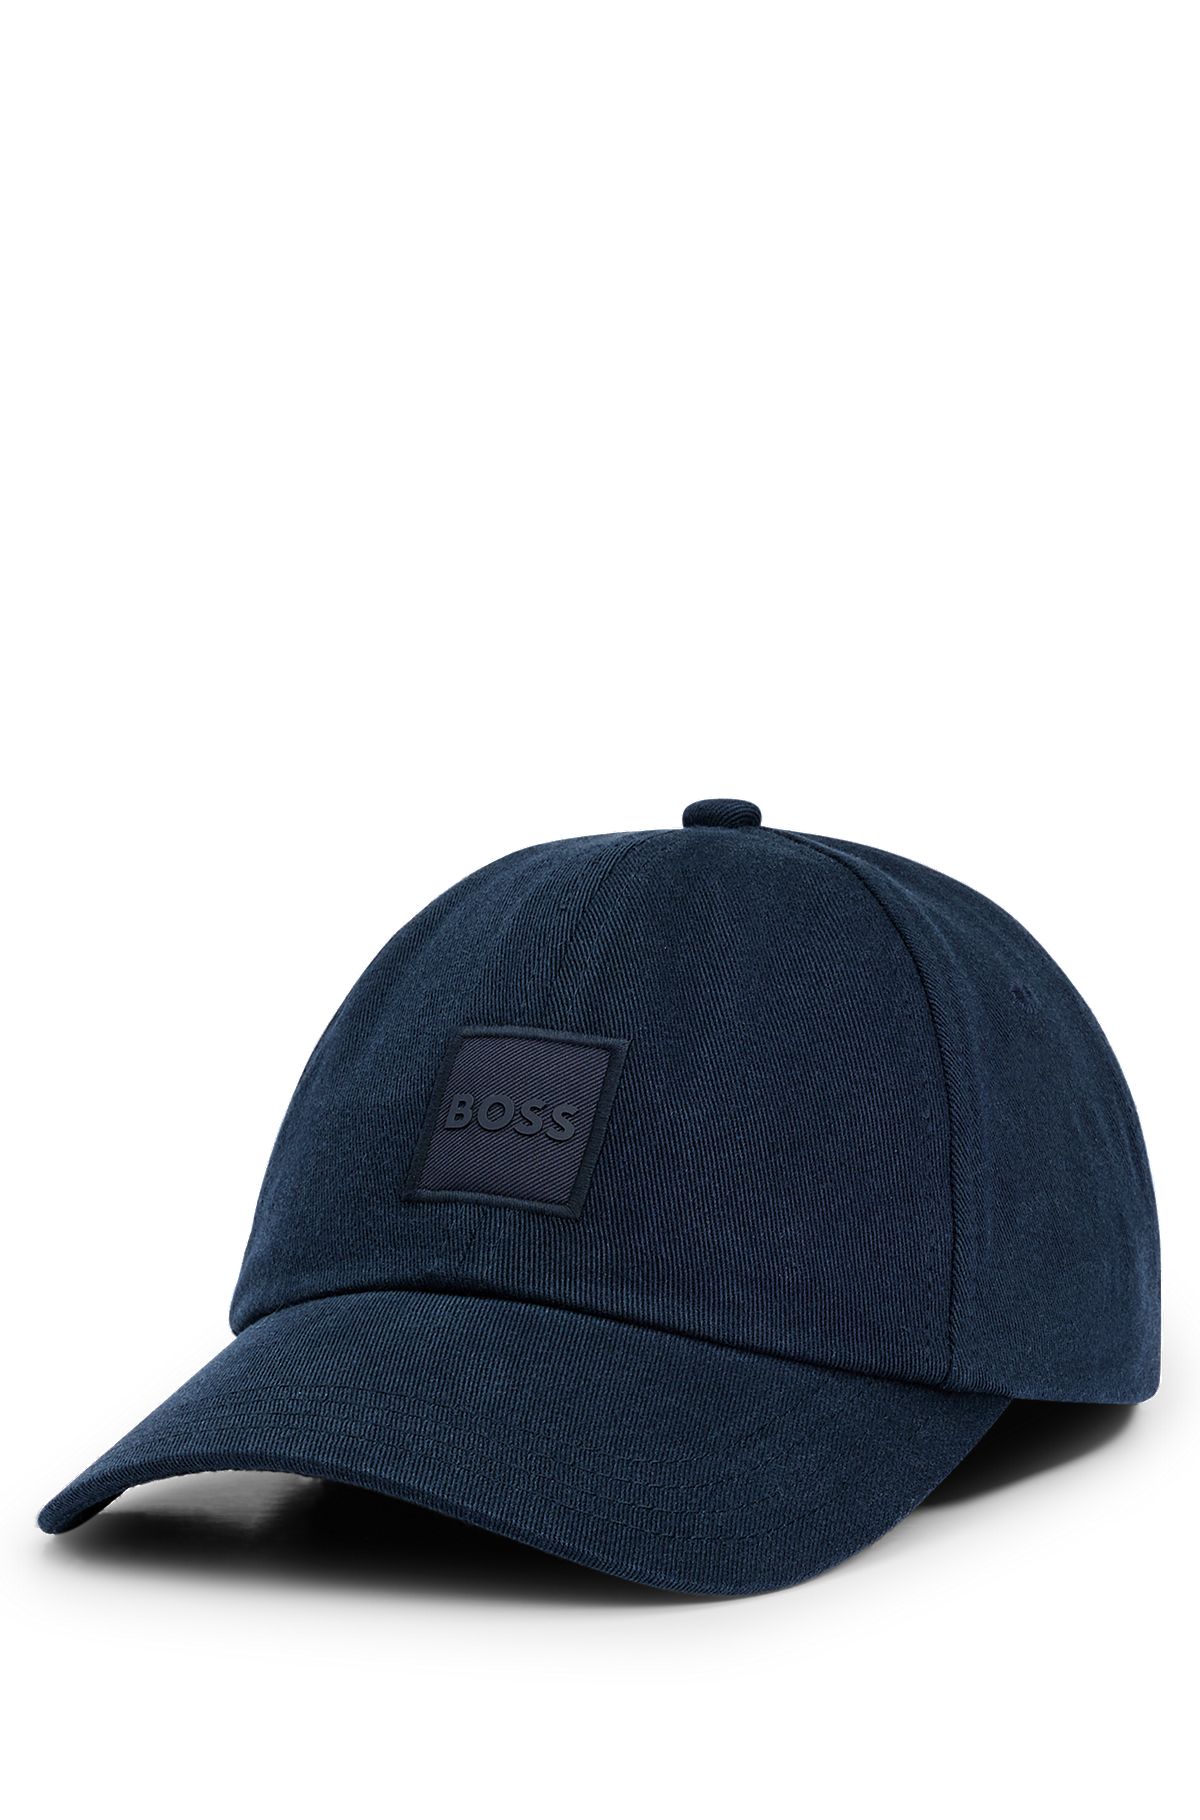 | Caps Men\'s BOSS Hats HUGO Blue & |